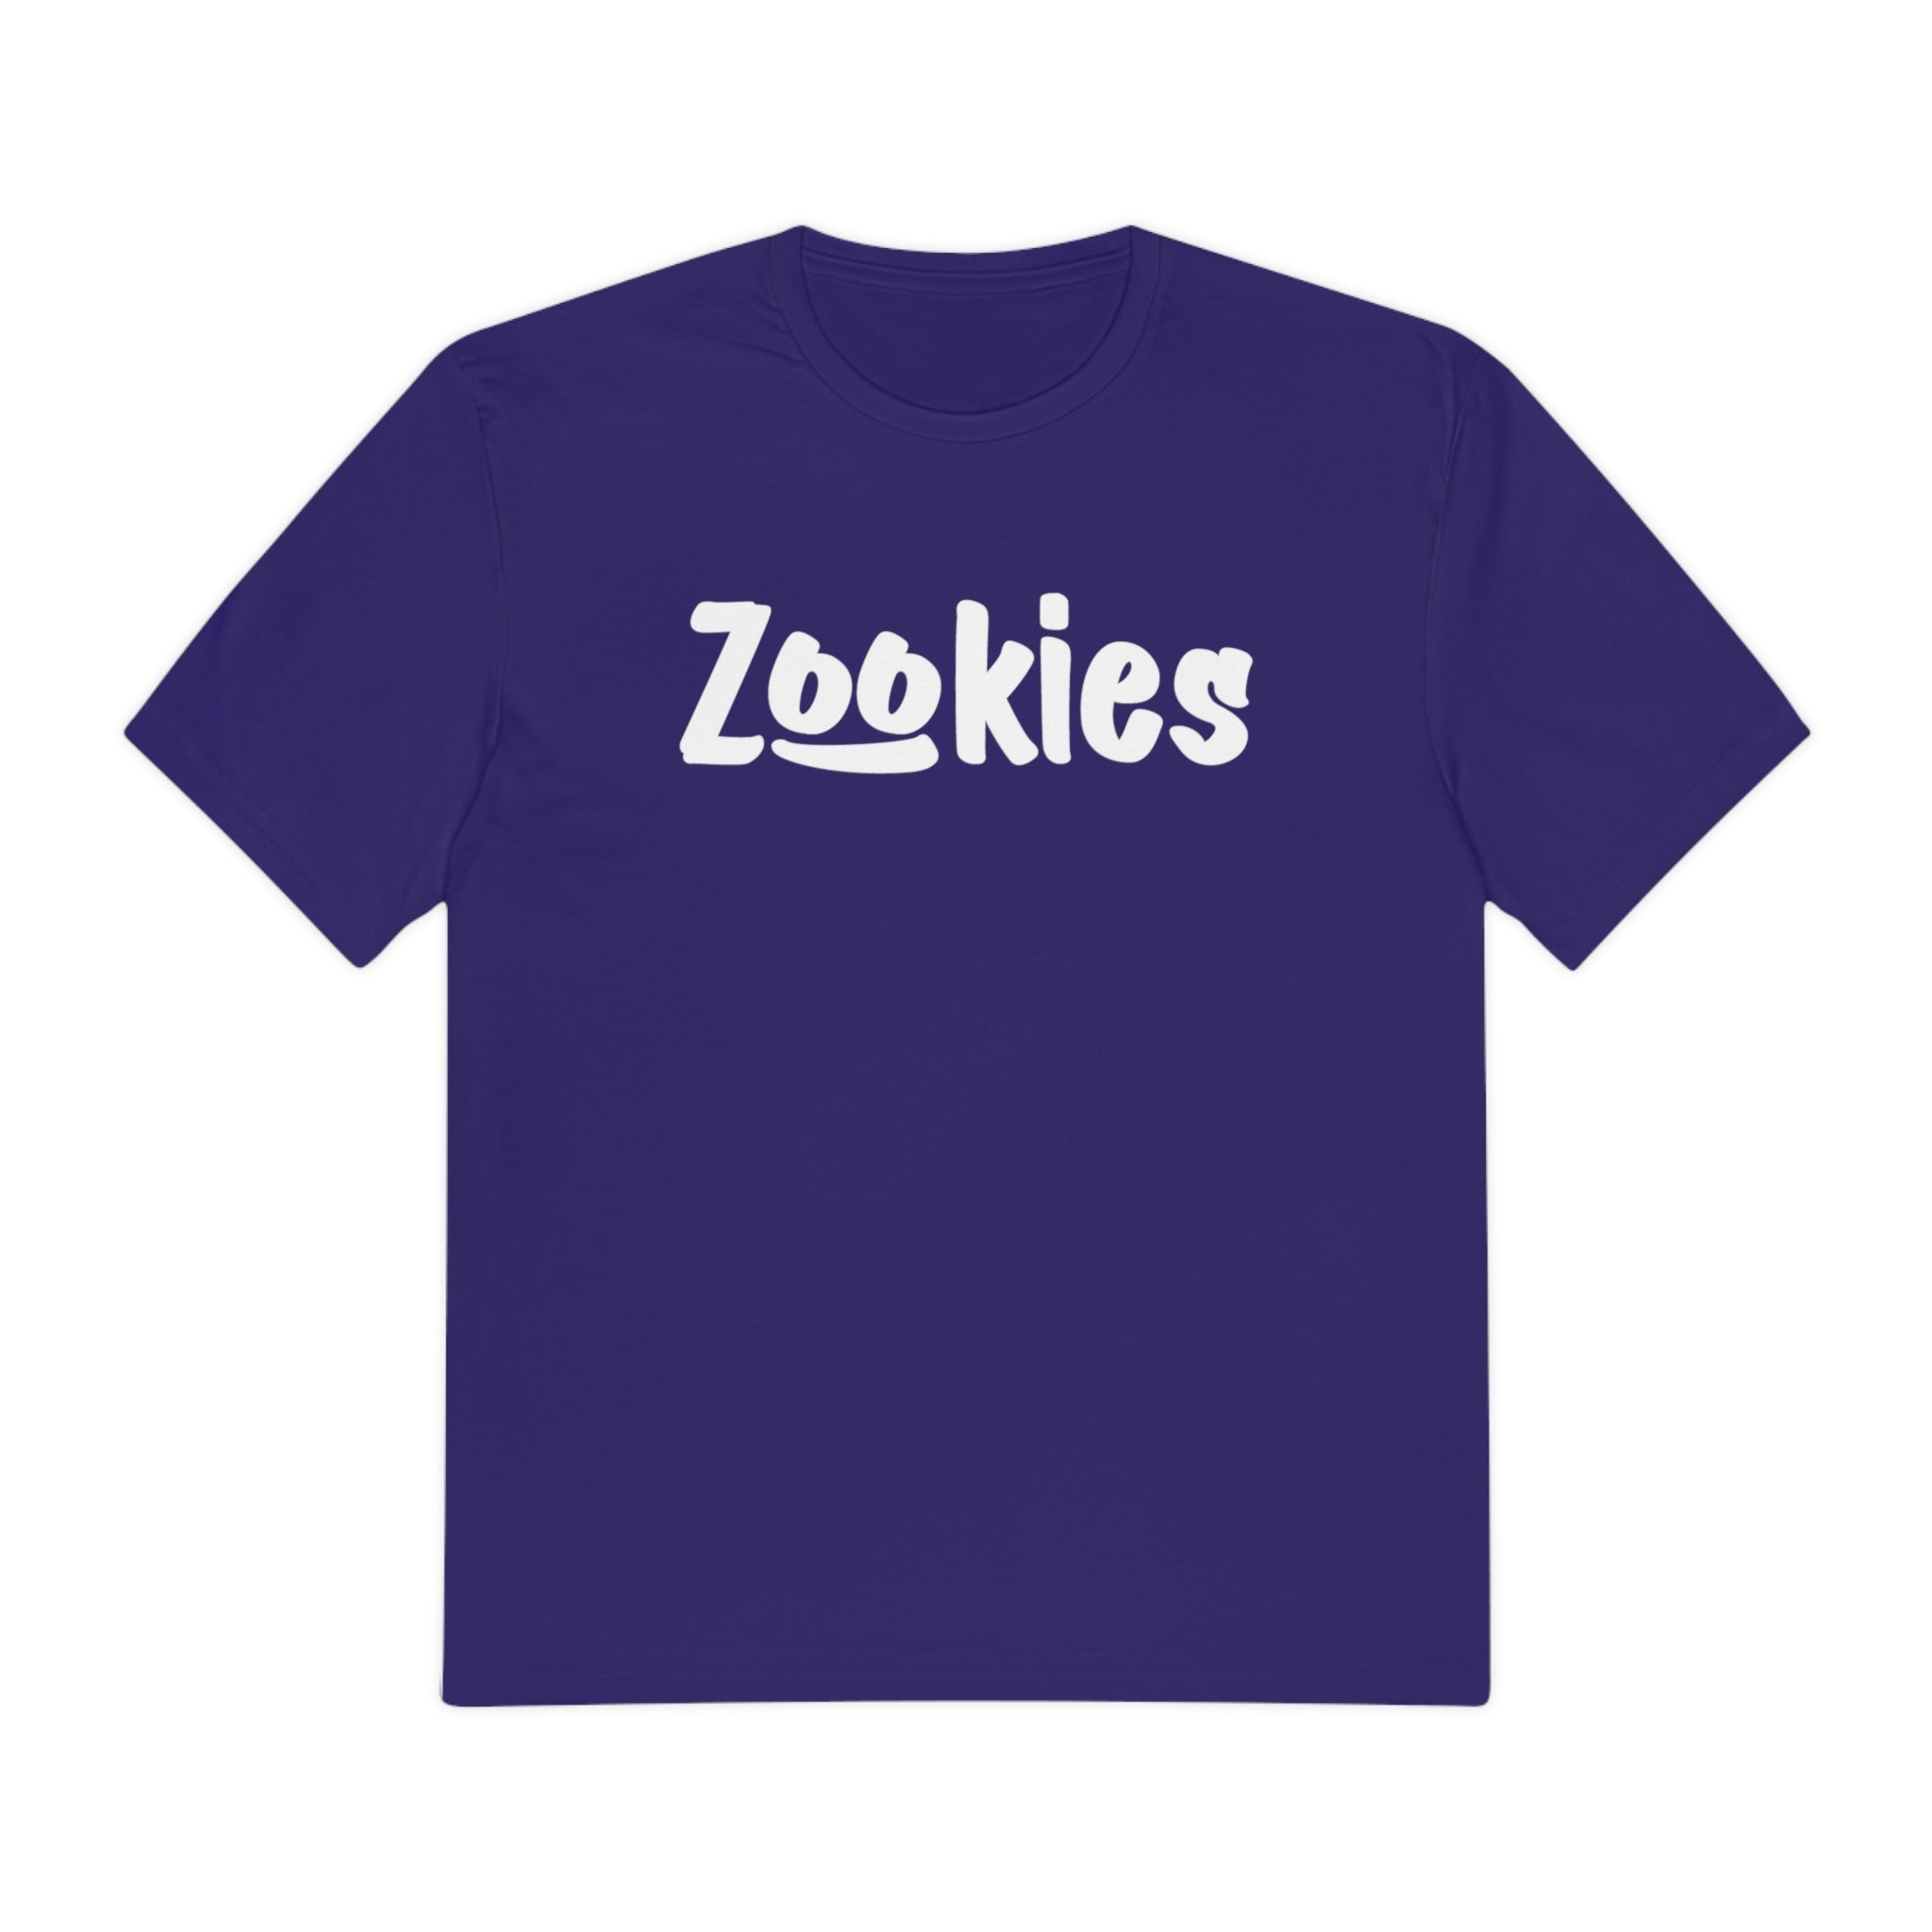 Graded Green Zookies Unisex Cannabis Tee Shirt UK